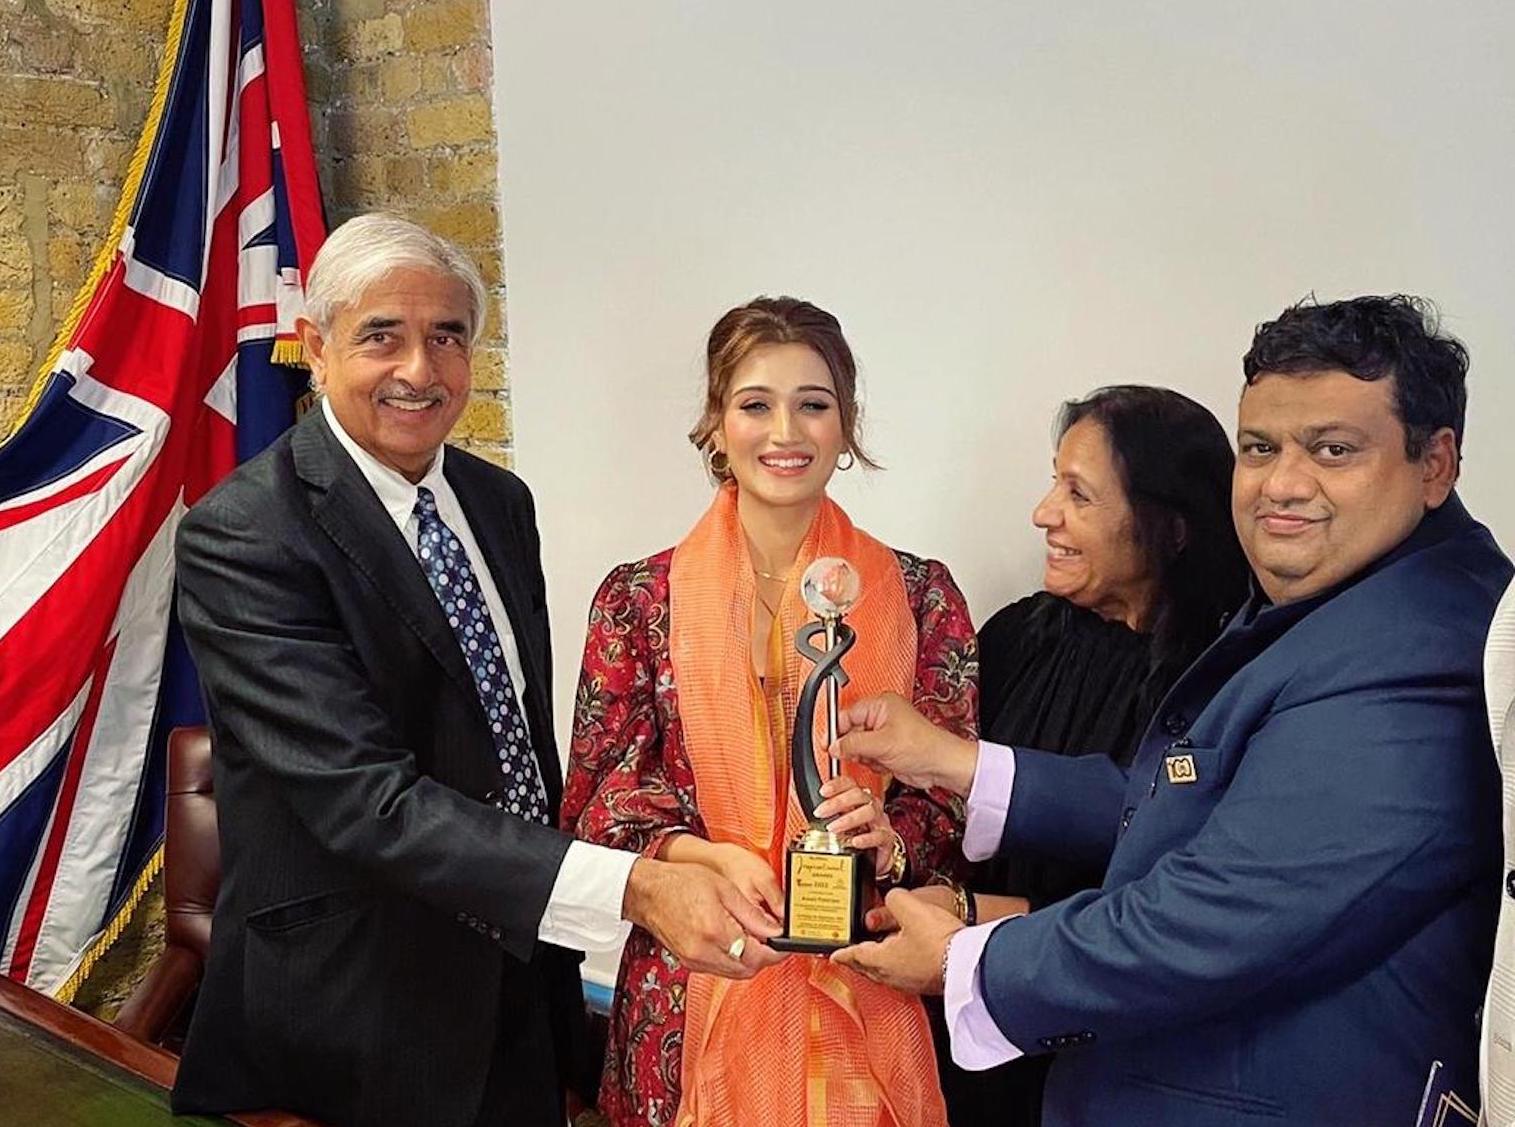 Southwark Mayor Councilor Sunil Chopra honored Aarushi Nishank